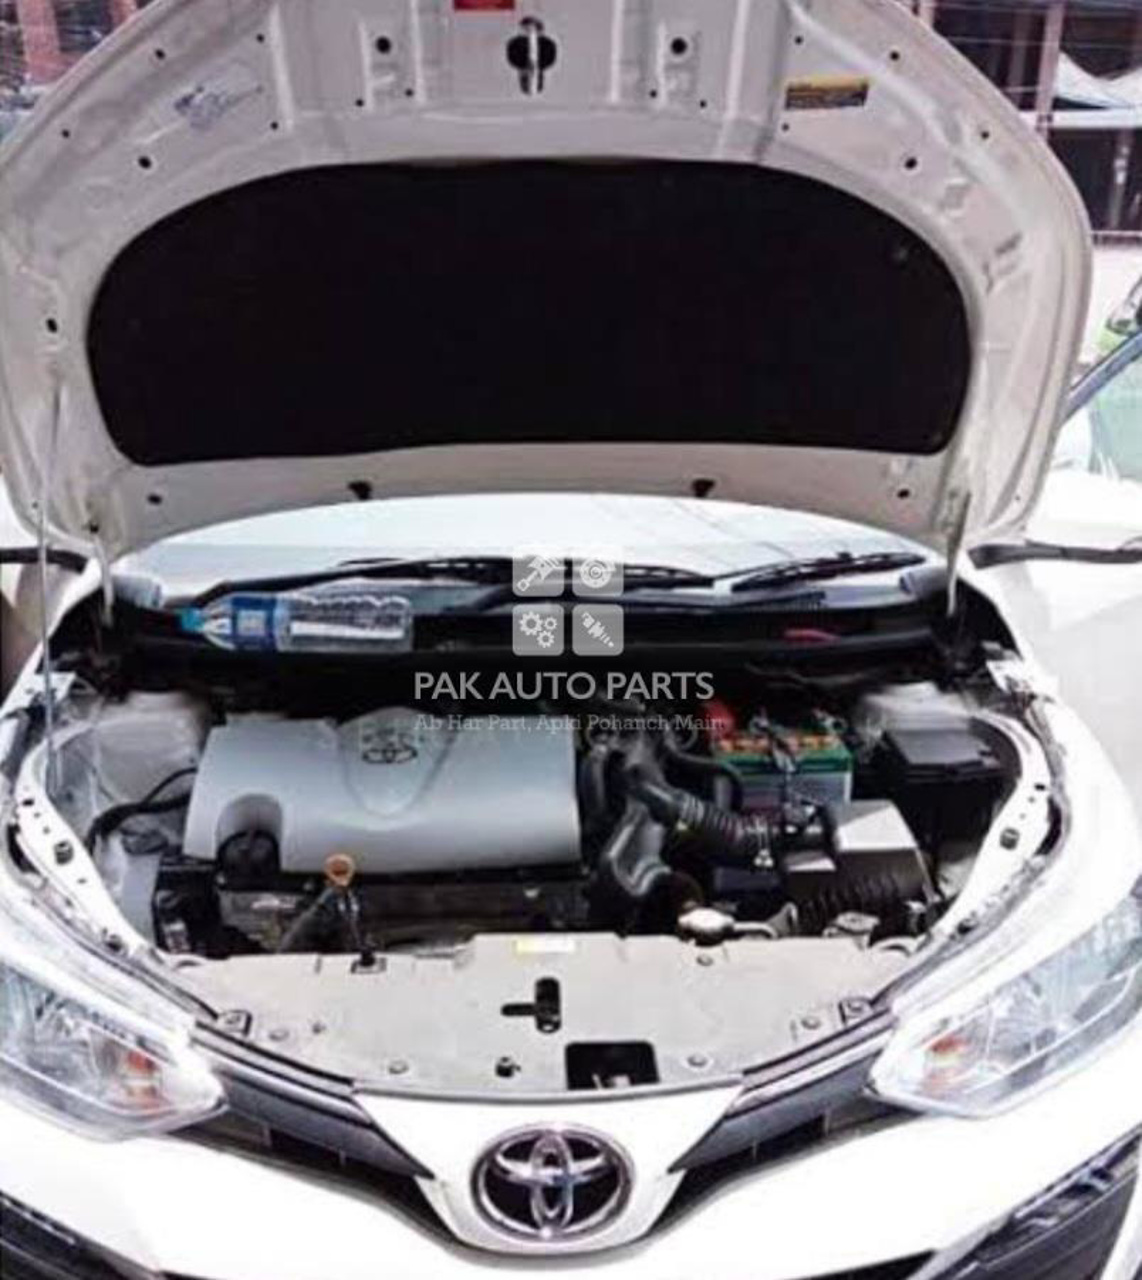 Picture of Toyota Yaris Bonnet Namda Hood Insulator Cover Protector | Model 2020~